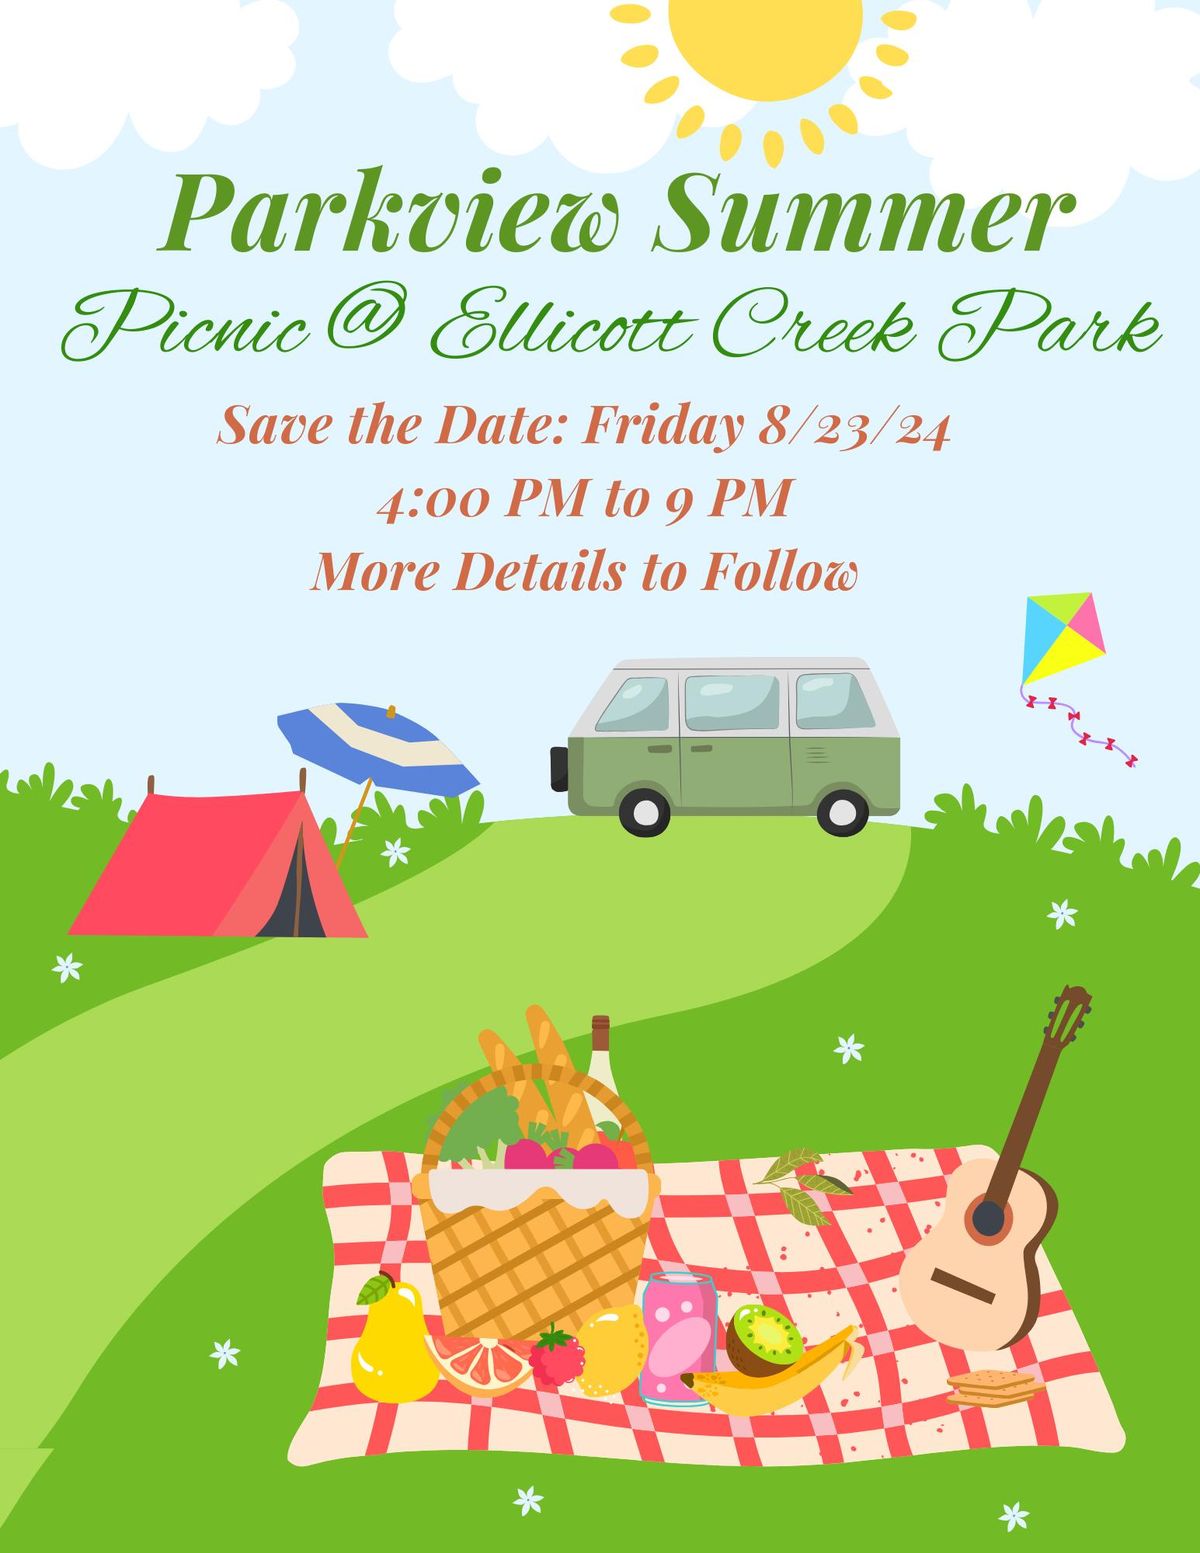 Parkview Summer Picnic